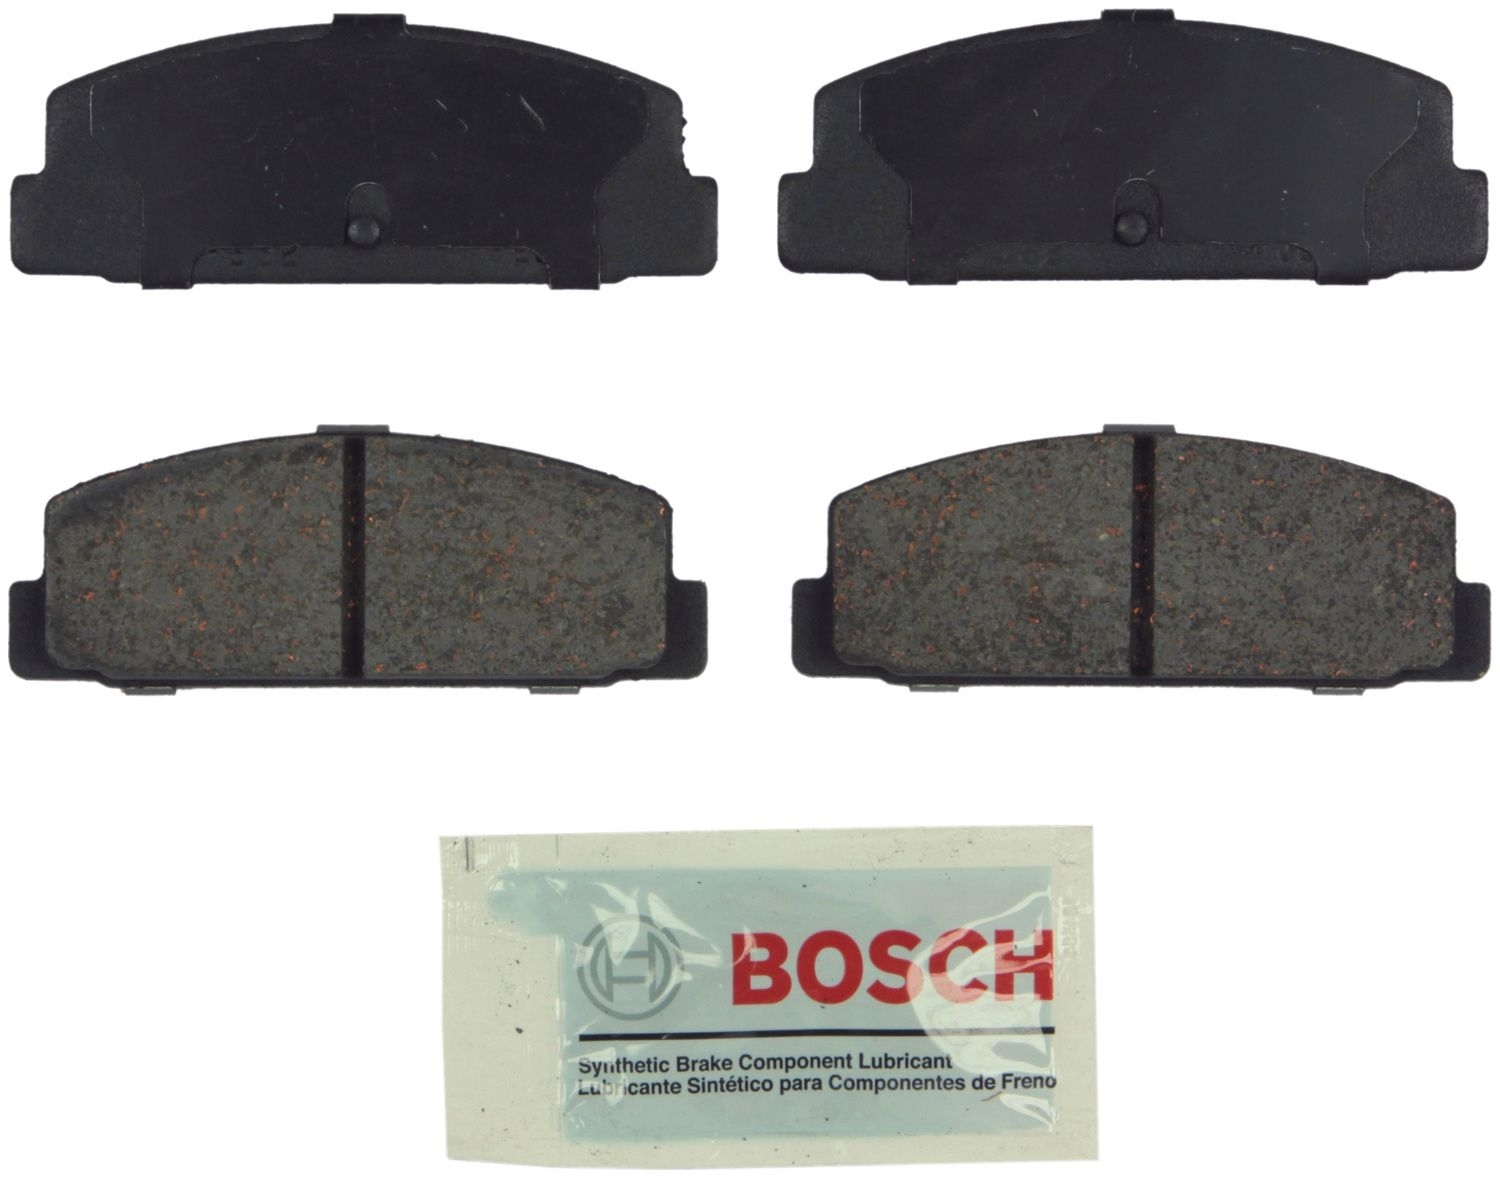 BOSCH BRAKE - Bosch Blue Brake Pads - BQC BE332